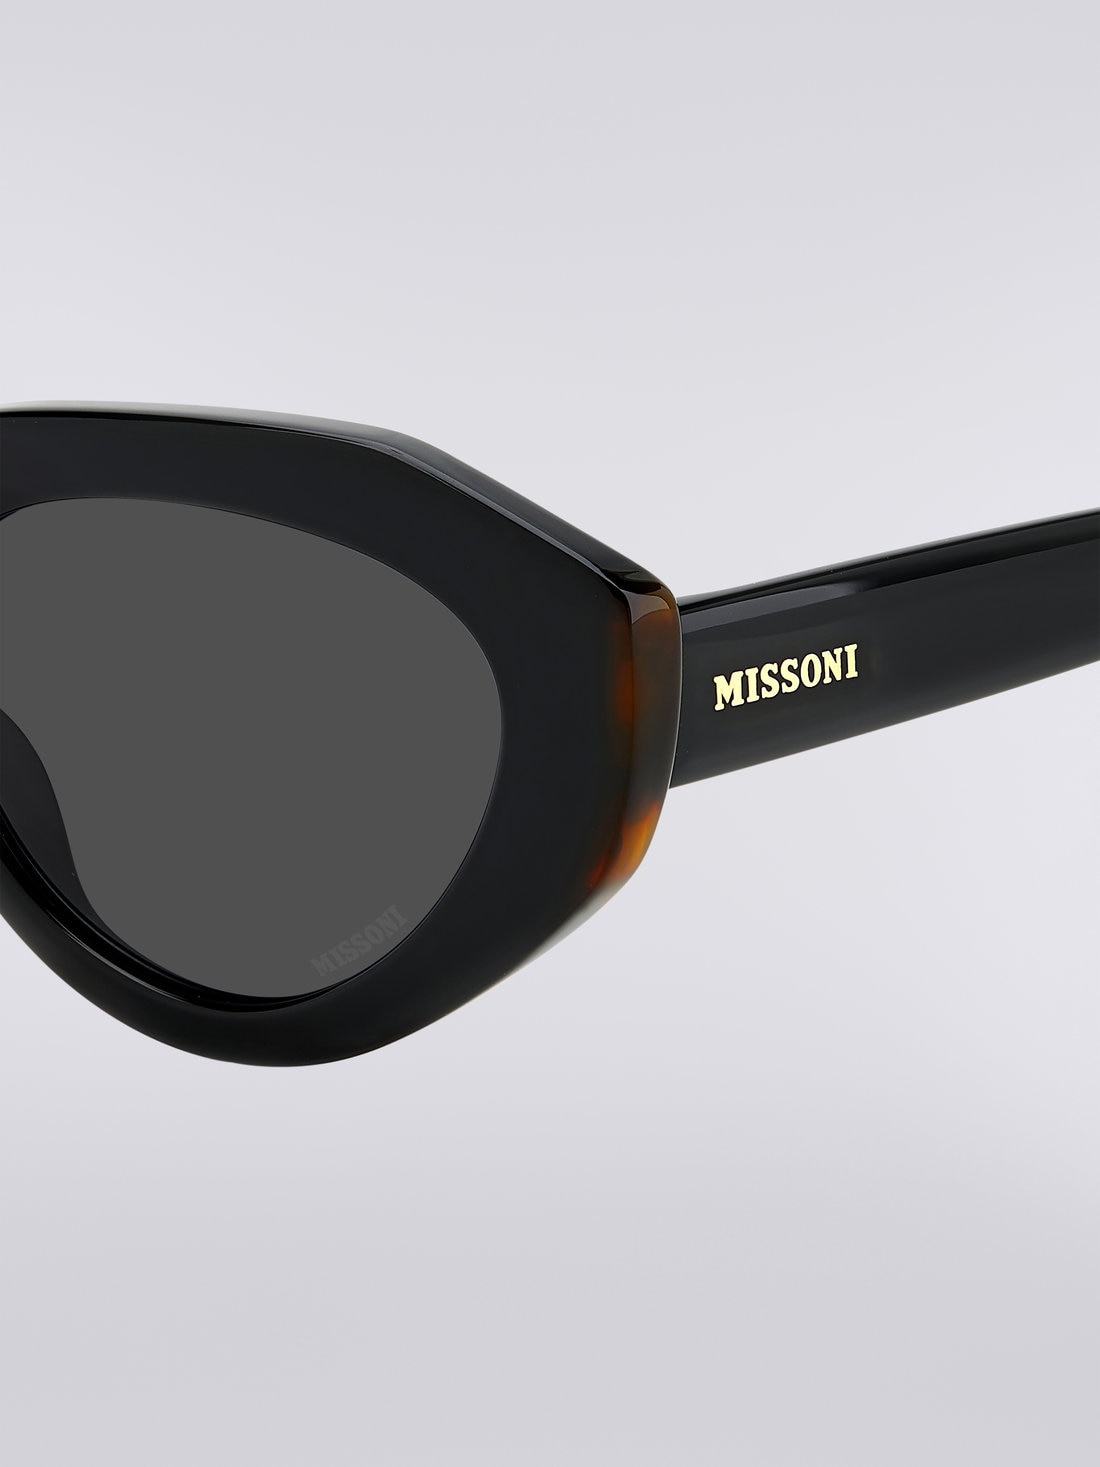 Missoni Seasonal Sonnenbrille aus Acetat, Schwarz    - 8051575840166 - 3